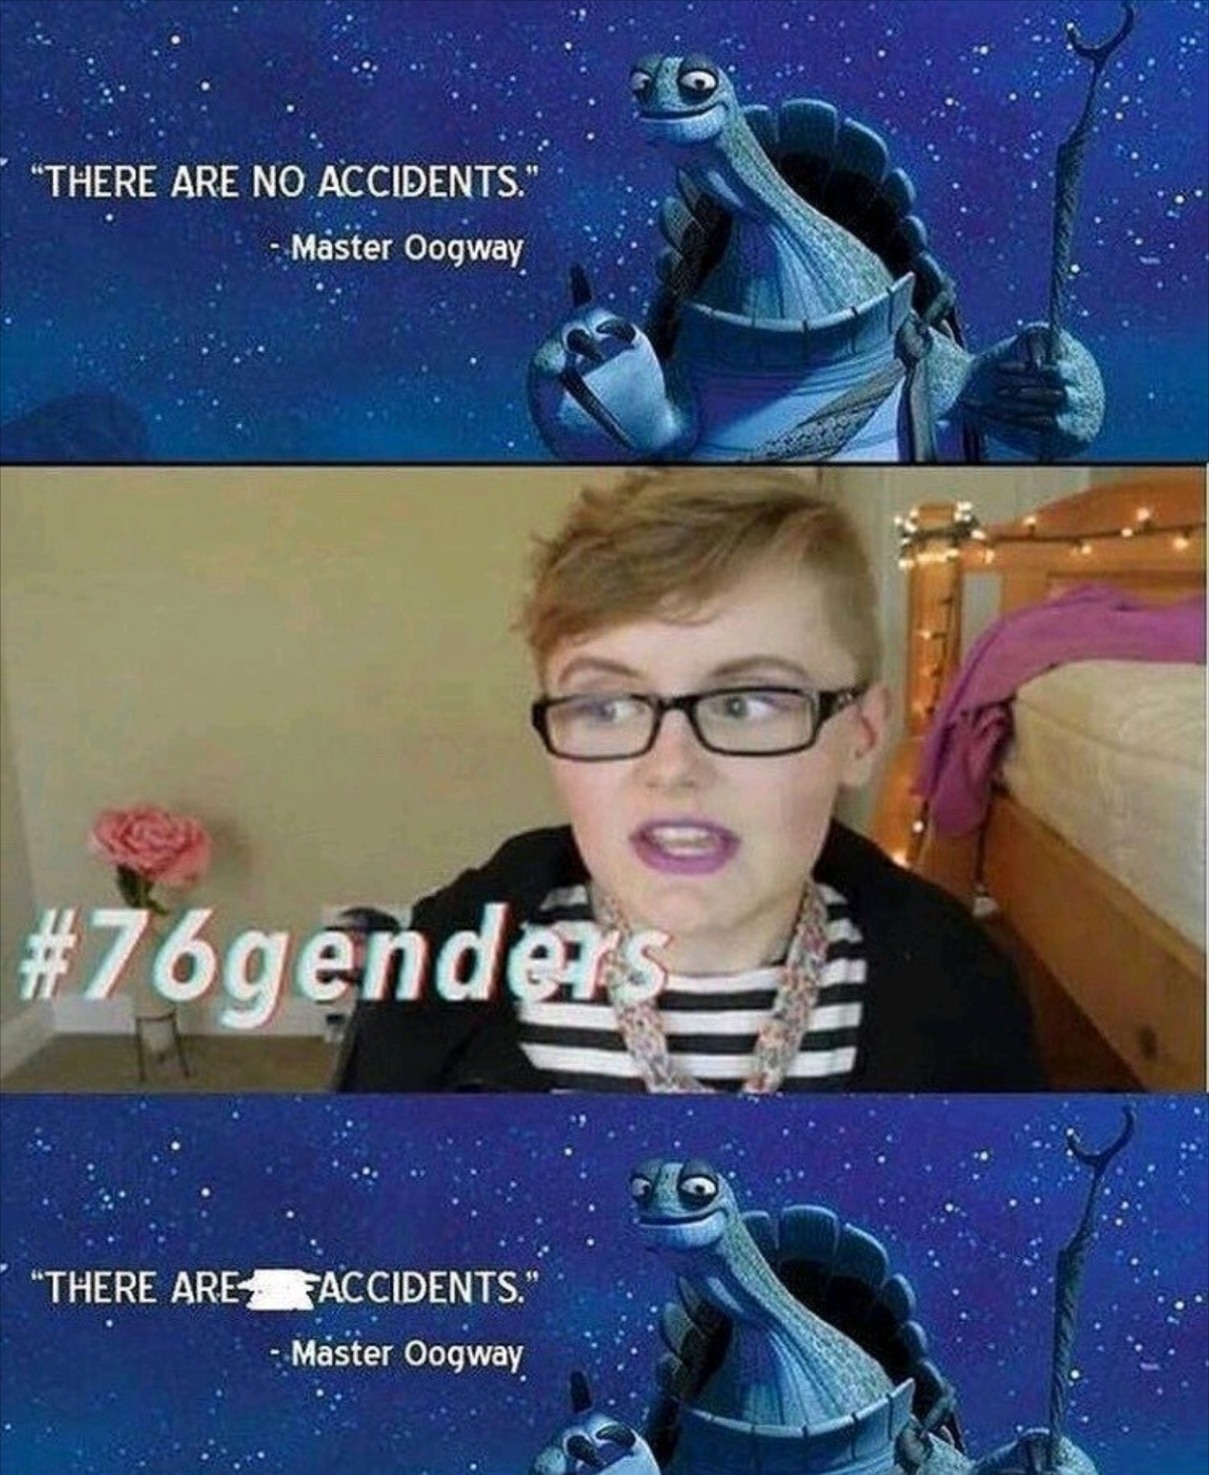 Enjoy the meme '#2 genders' uploaded by rancor808. 